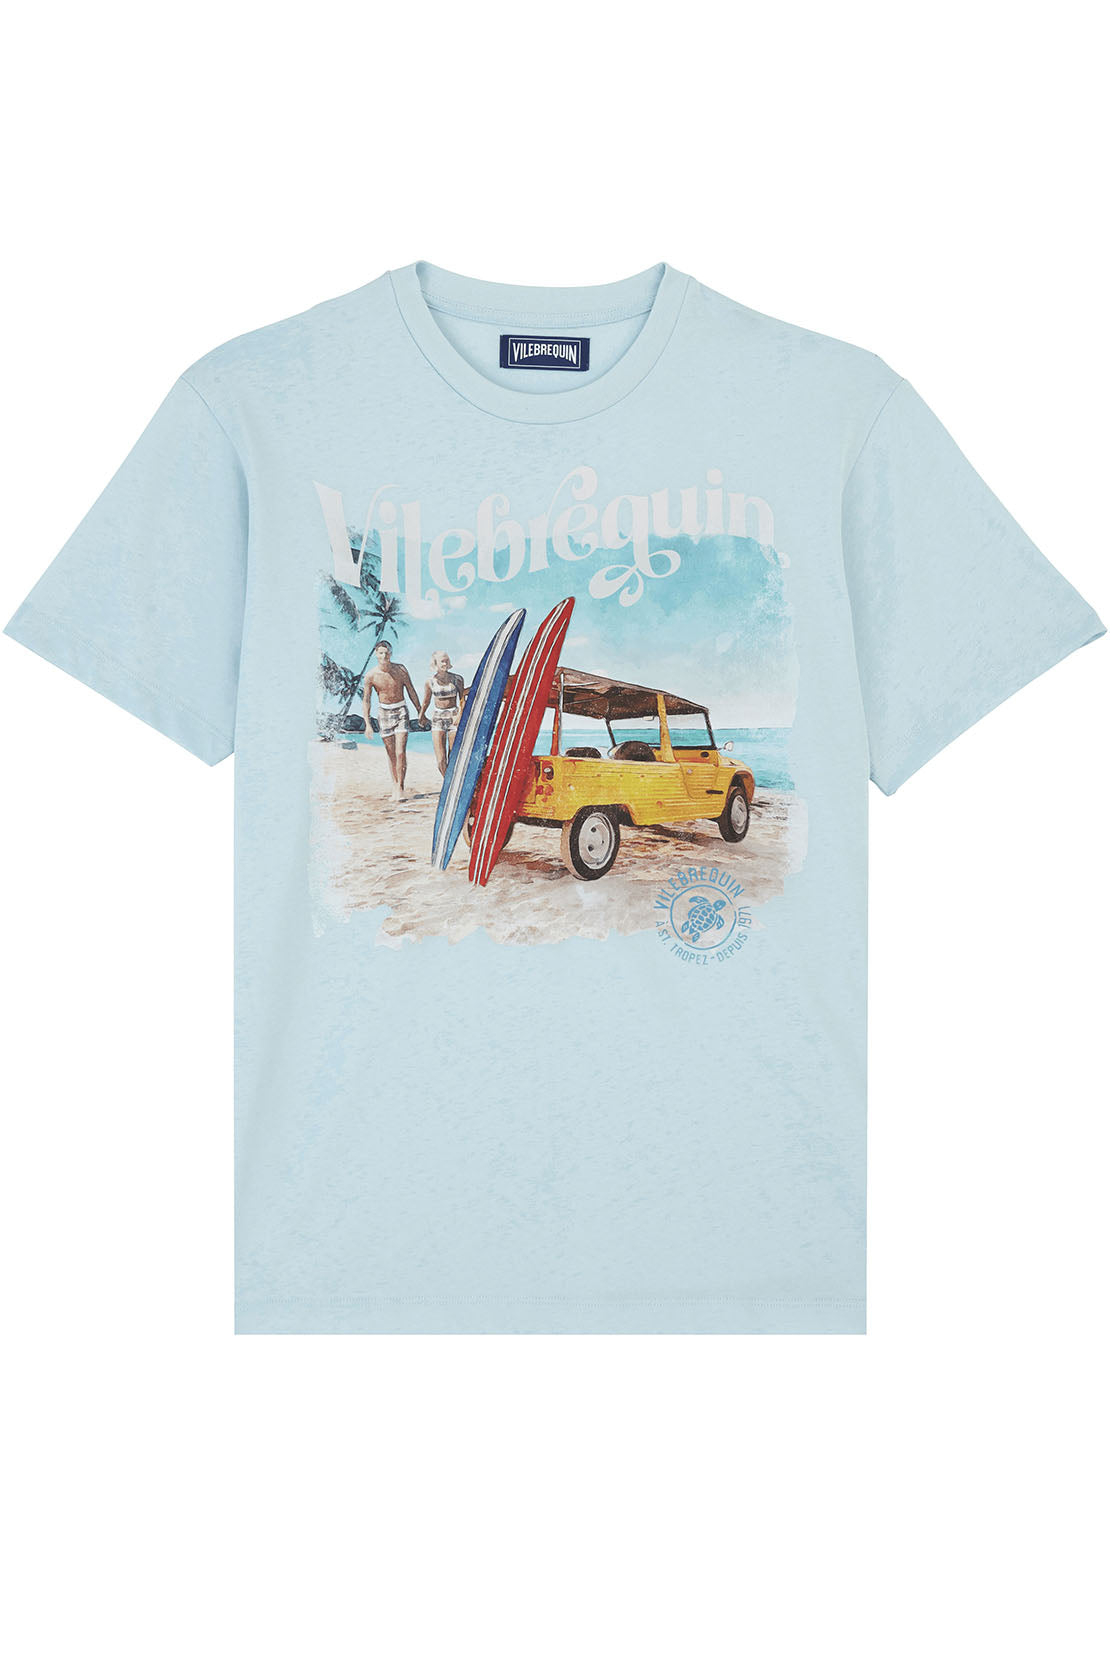 VILEBREQUIN - PORTISOL Cotton T-Shirt SURF AND MINI MOKE in Sky Blue PTSAP384